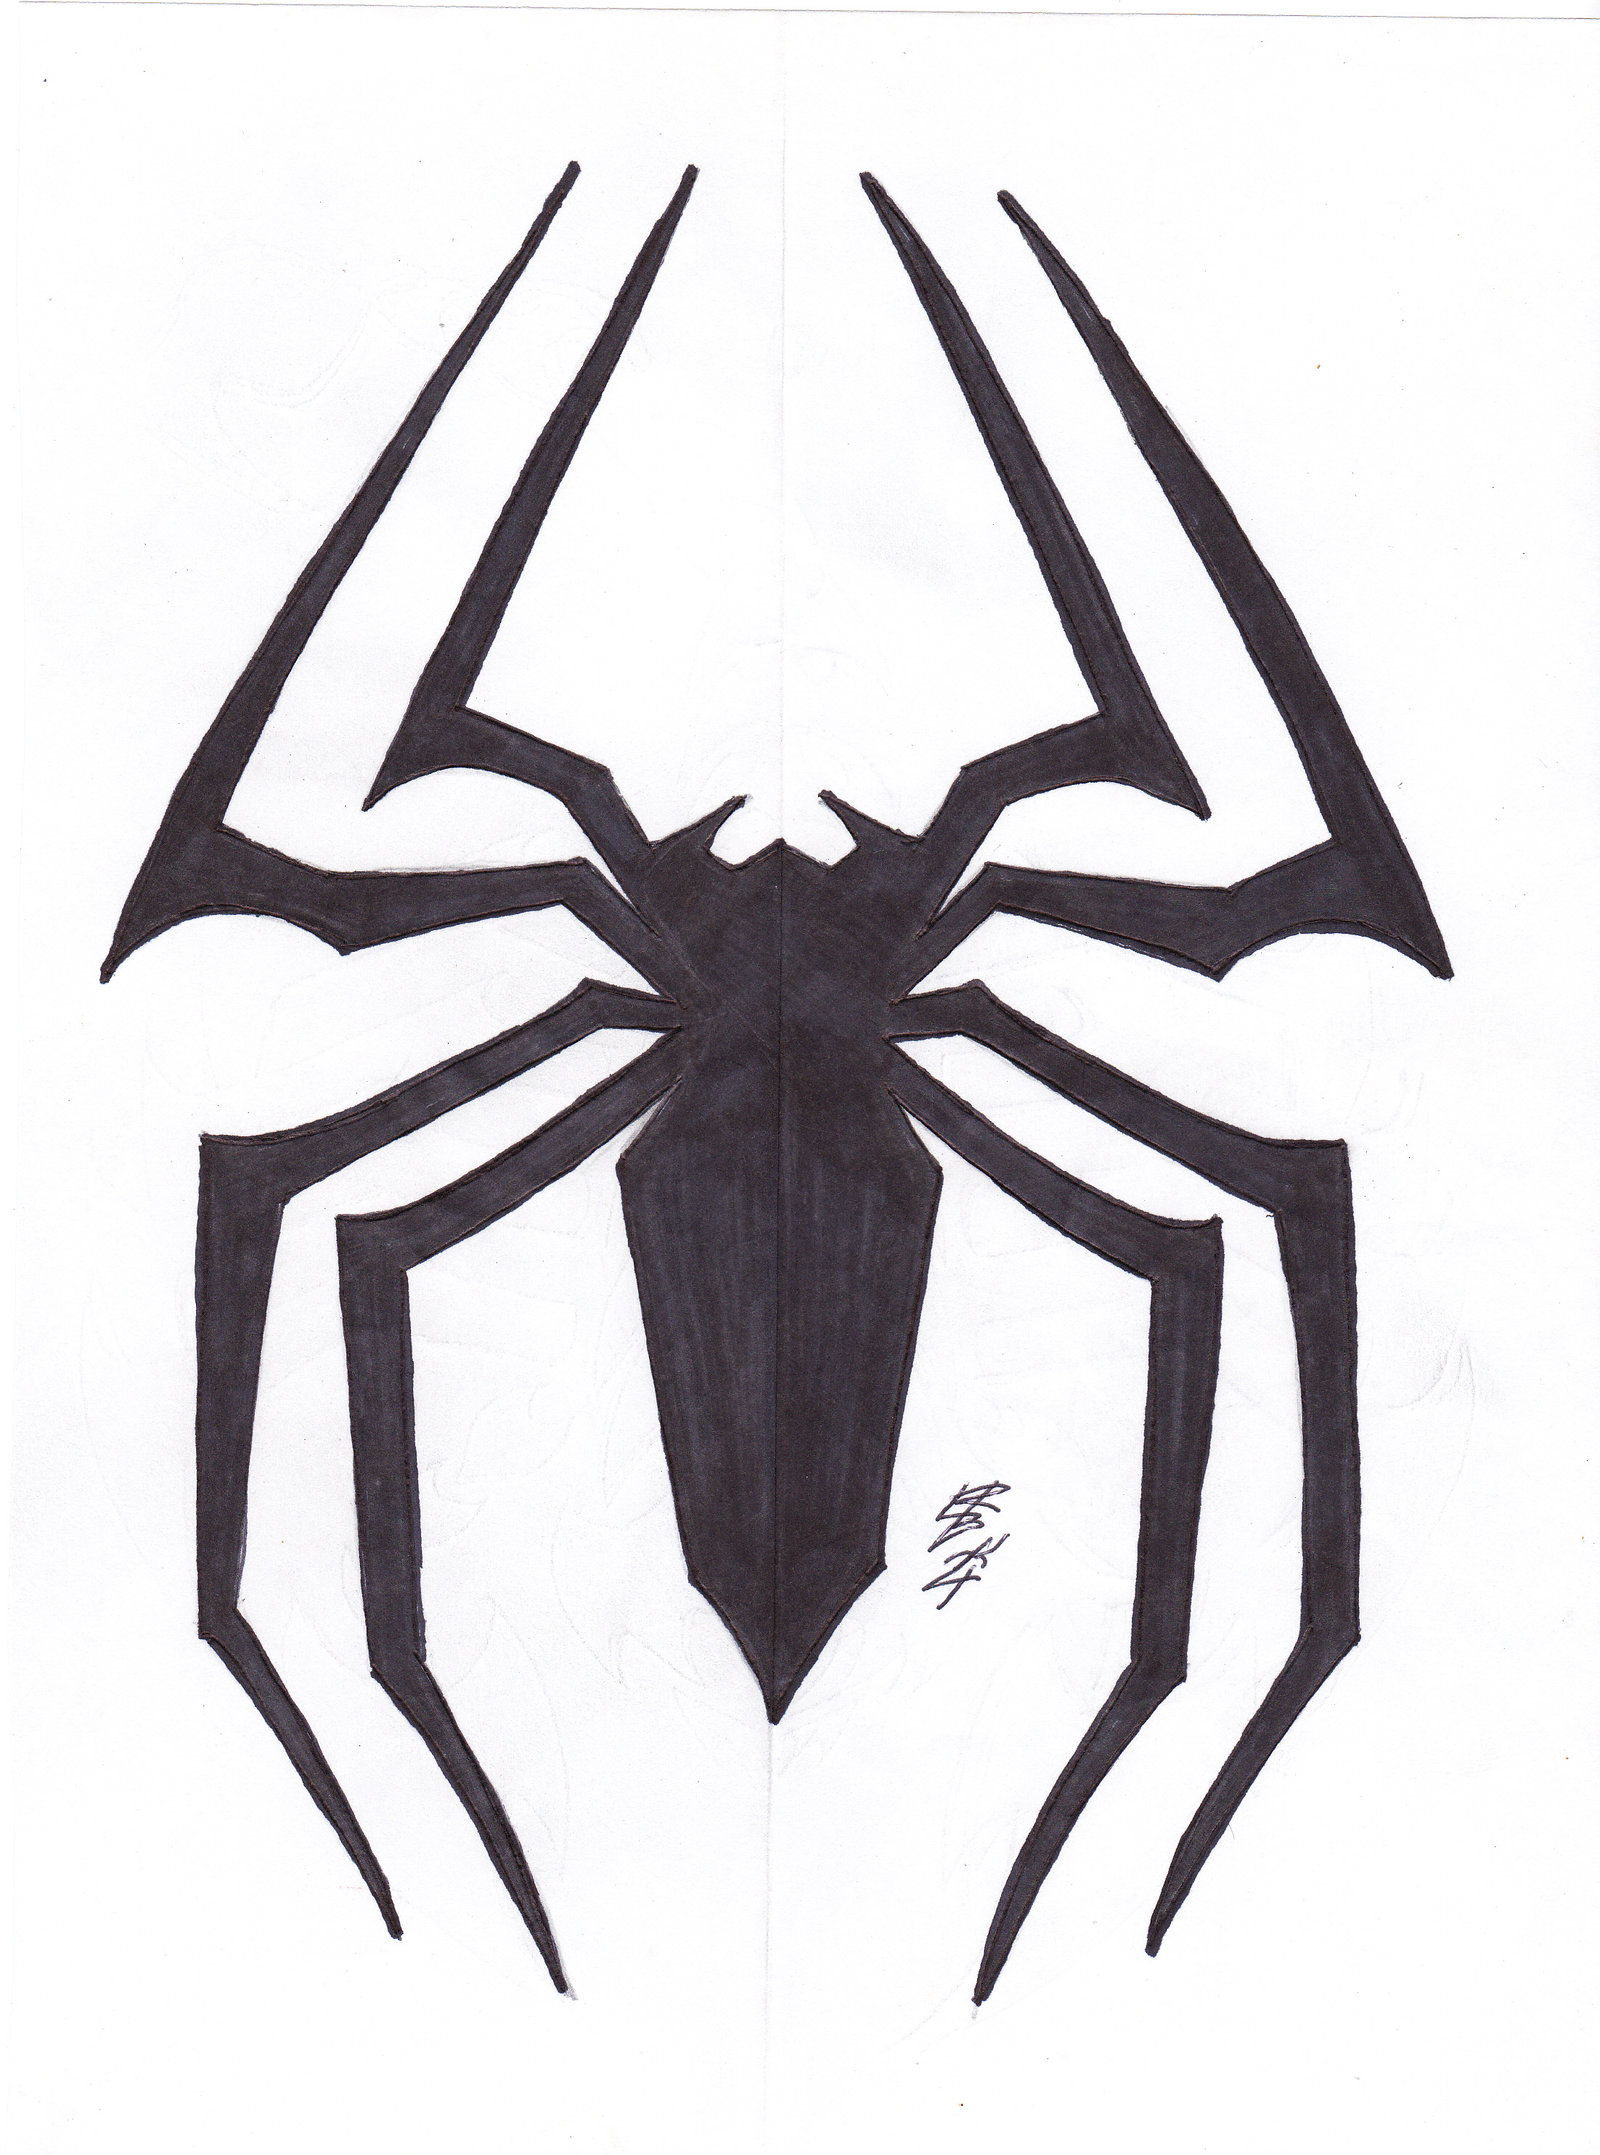 SPIDER-MAN SPIDER SYMBOL by lrayjus21 on DeviantArt